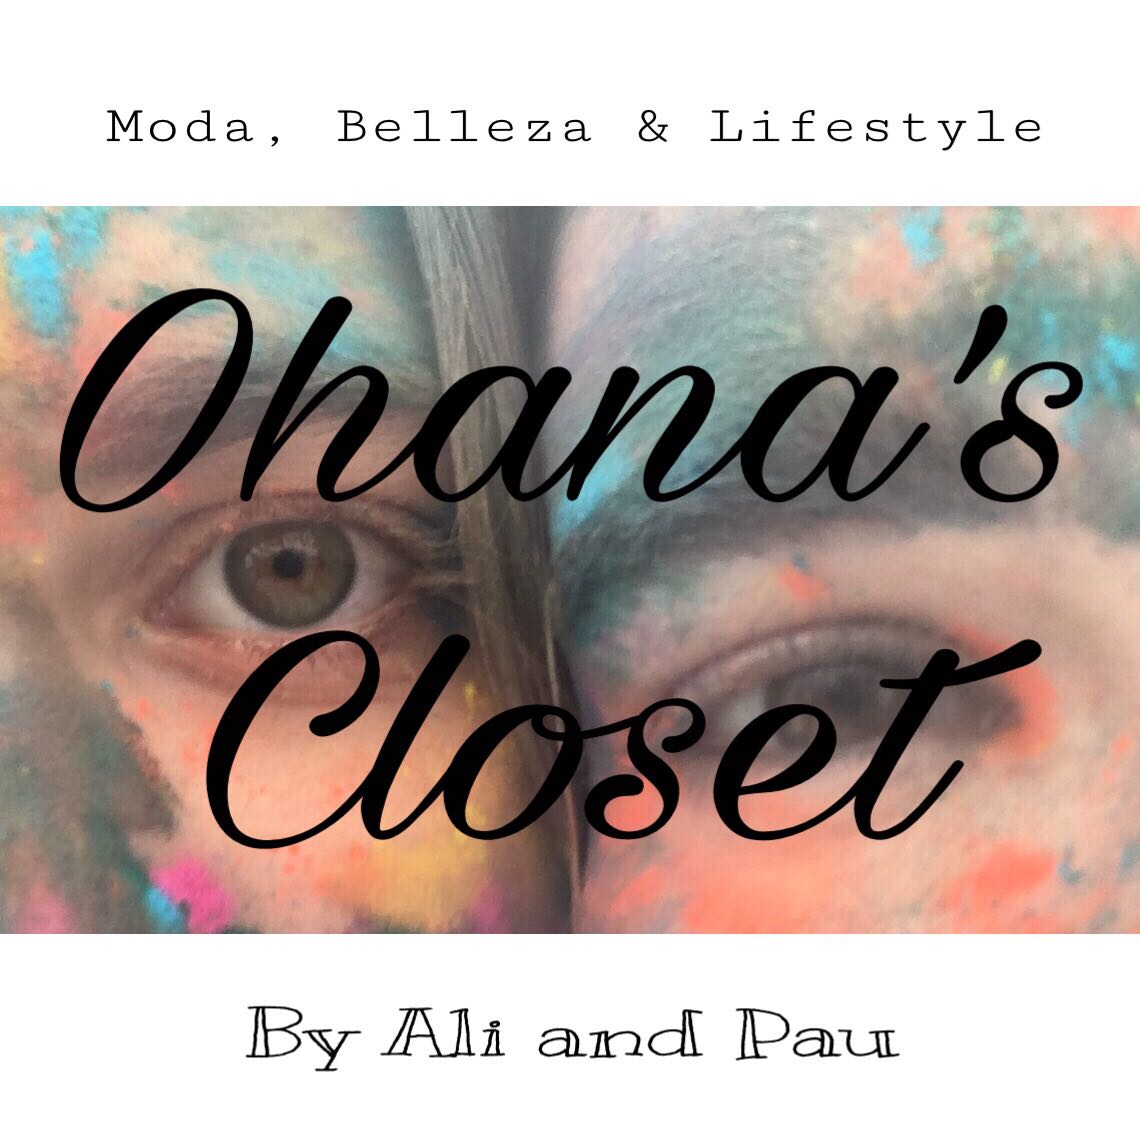 Ohana's Closet